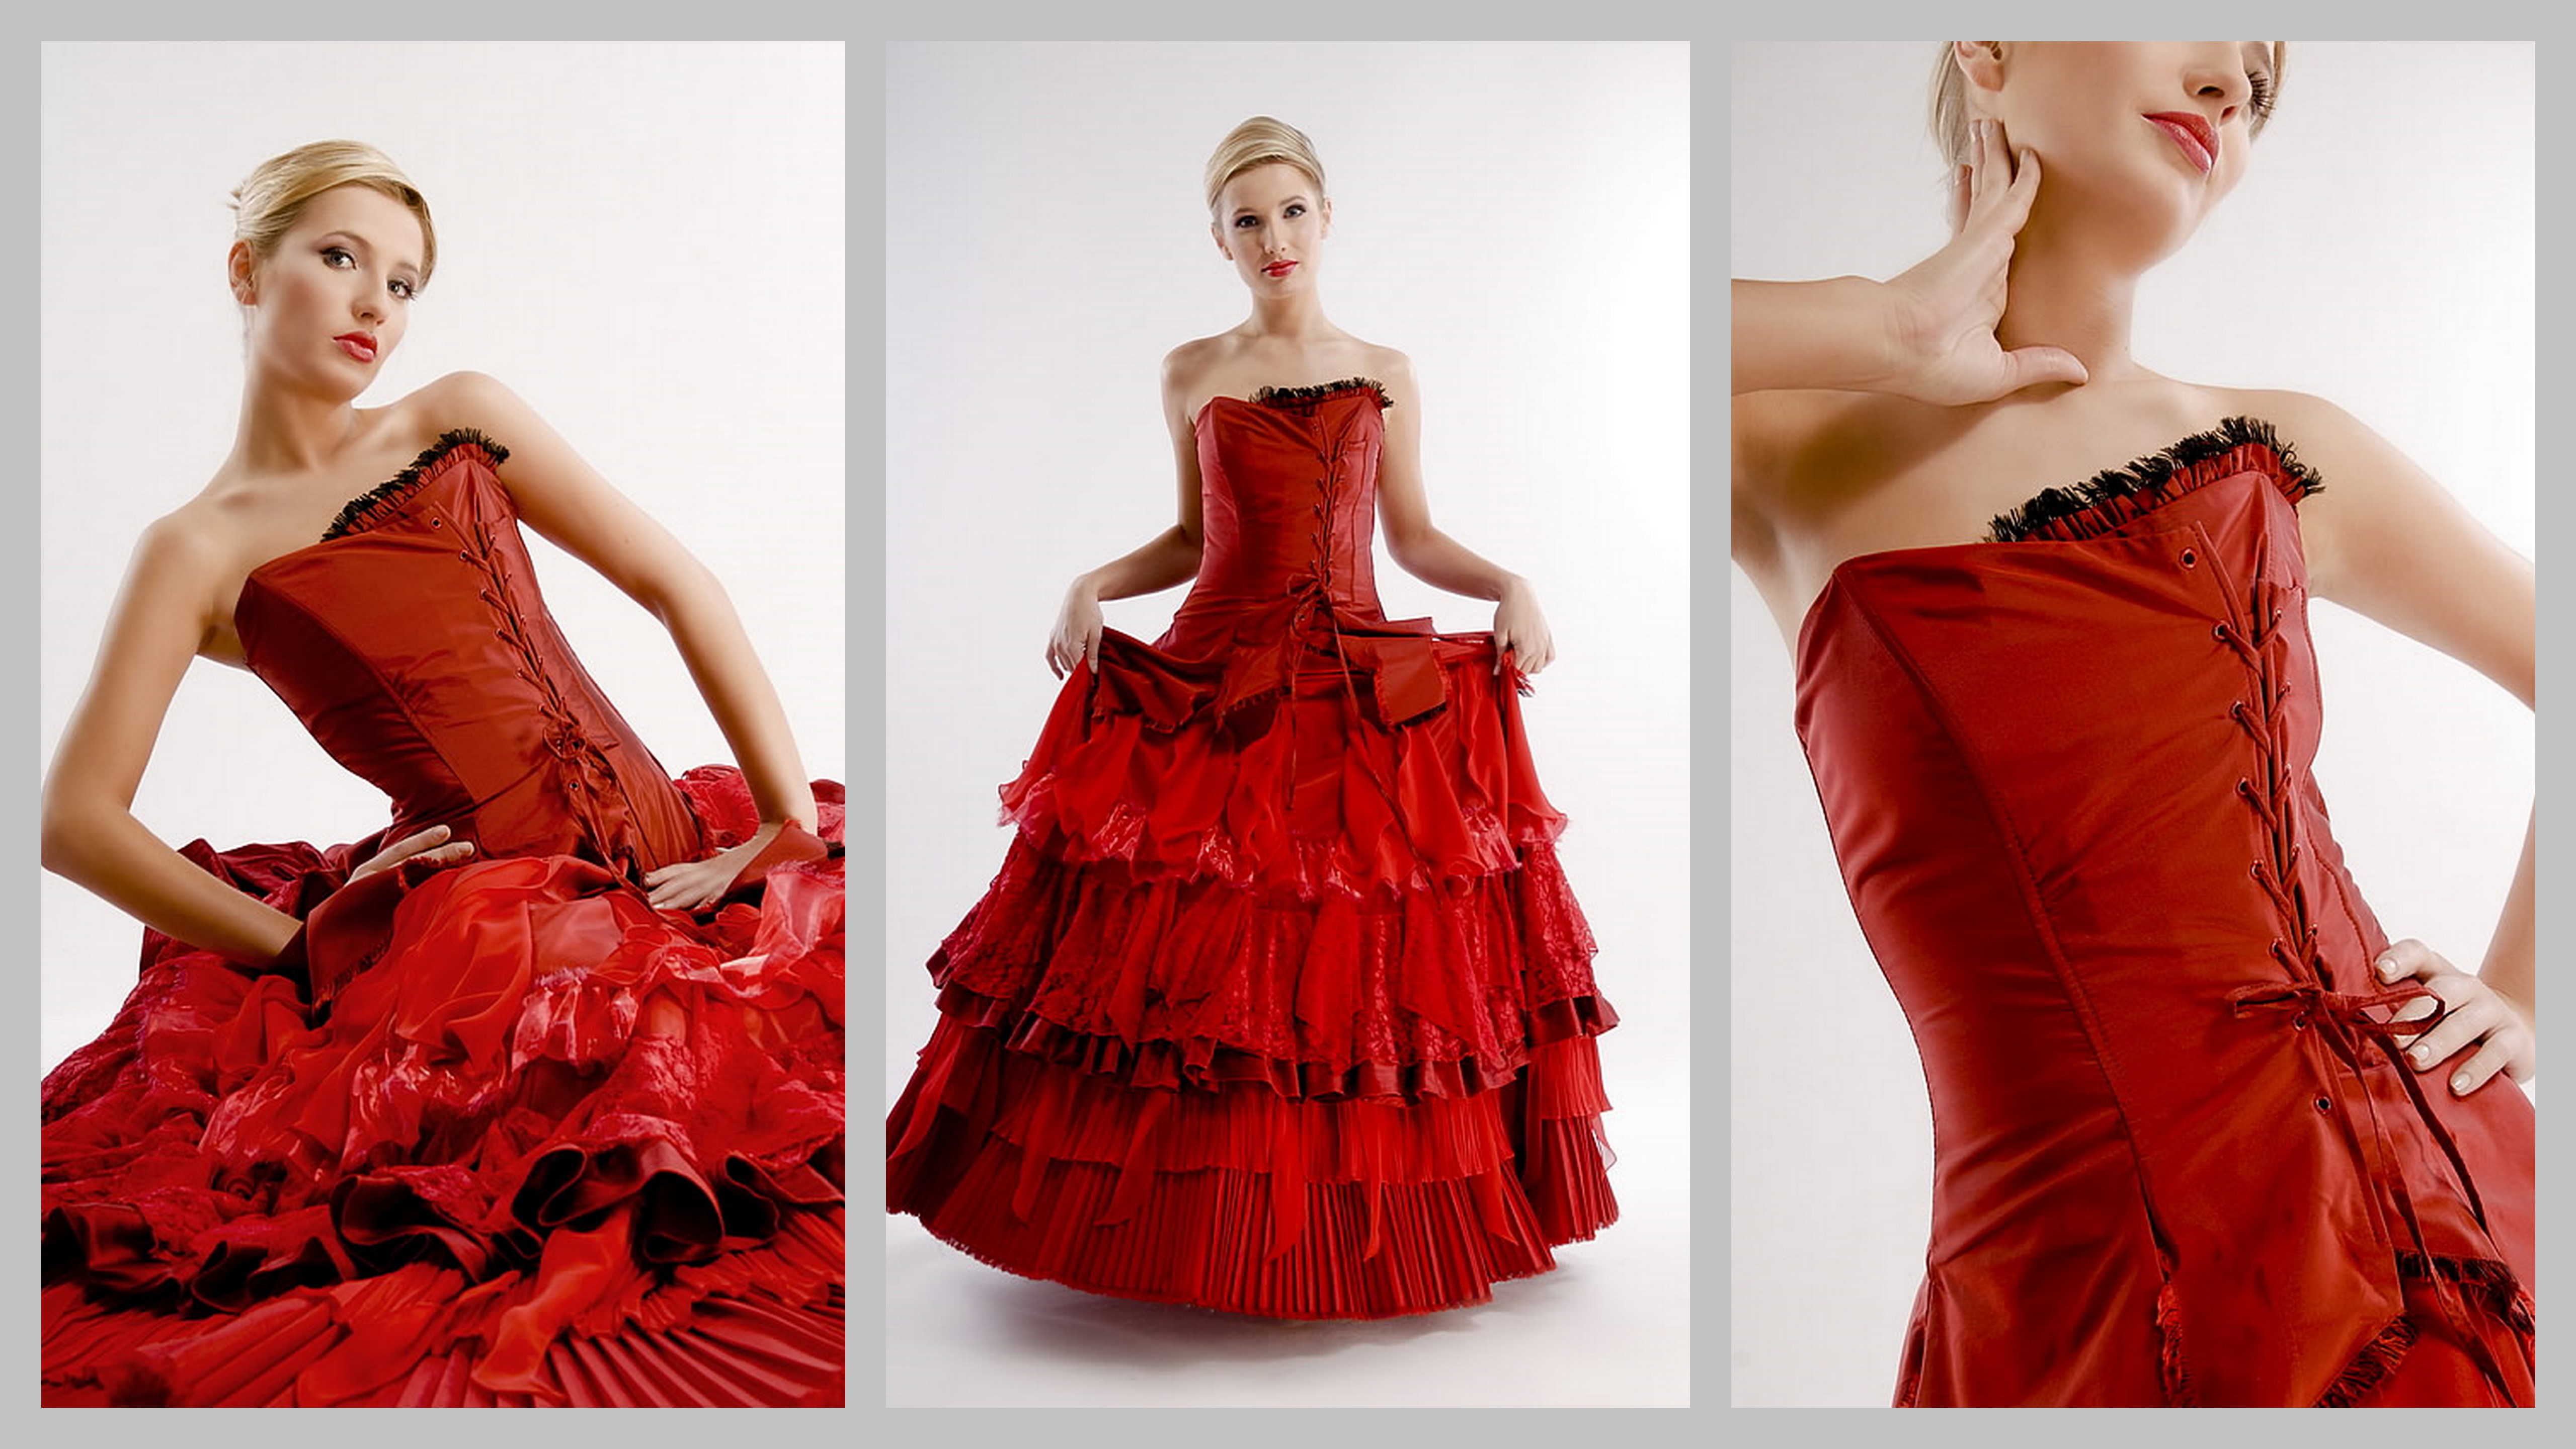 Bella P, red wedding dress | Flickr - Photo Sharing!